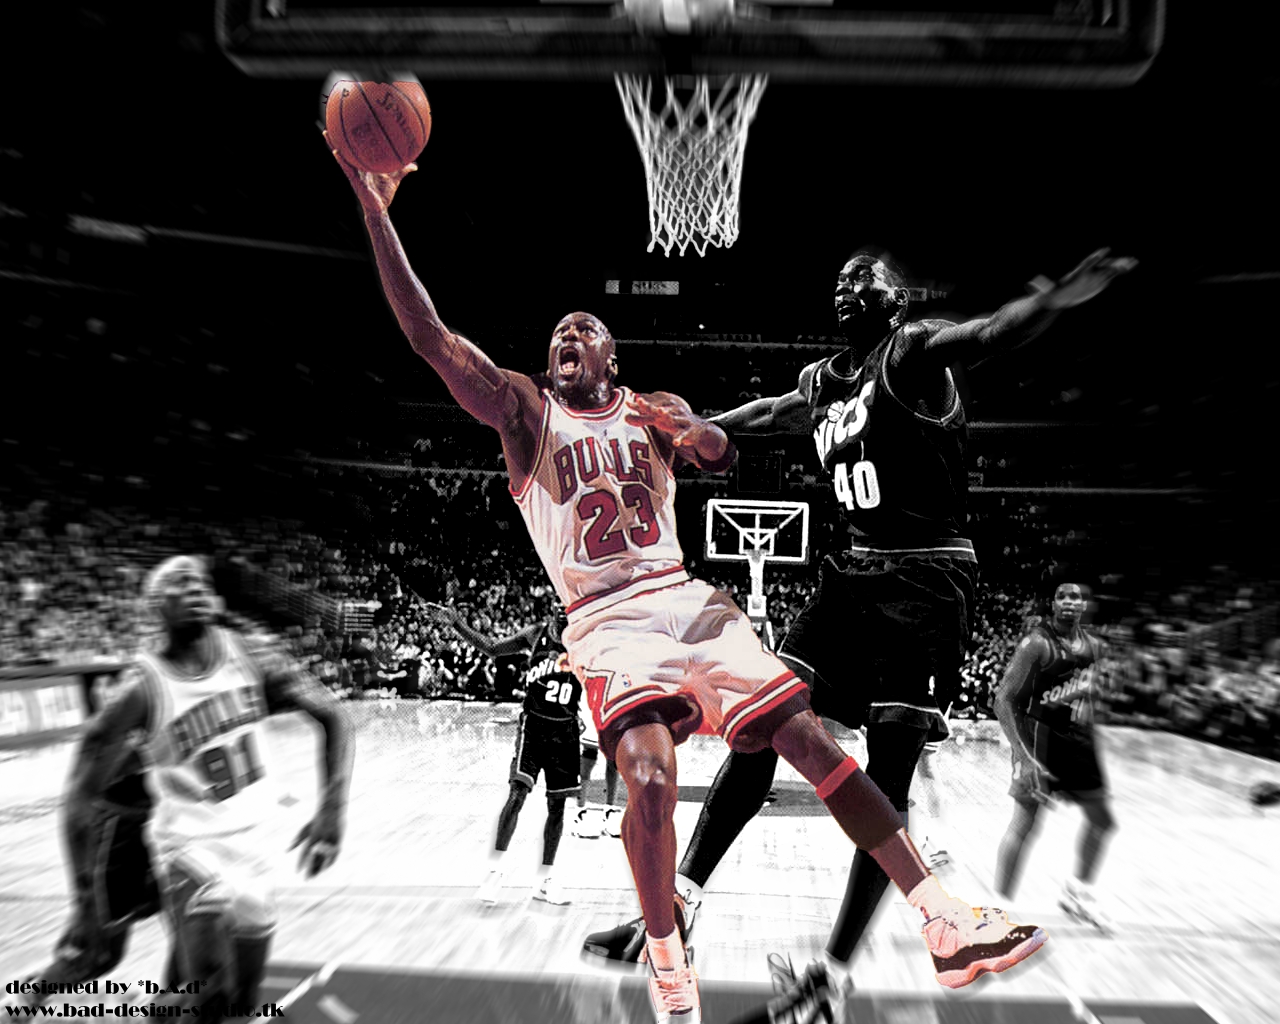 Michael Jordan Wallpaper All About Sports Stars